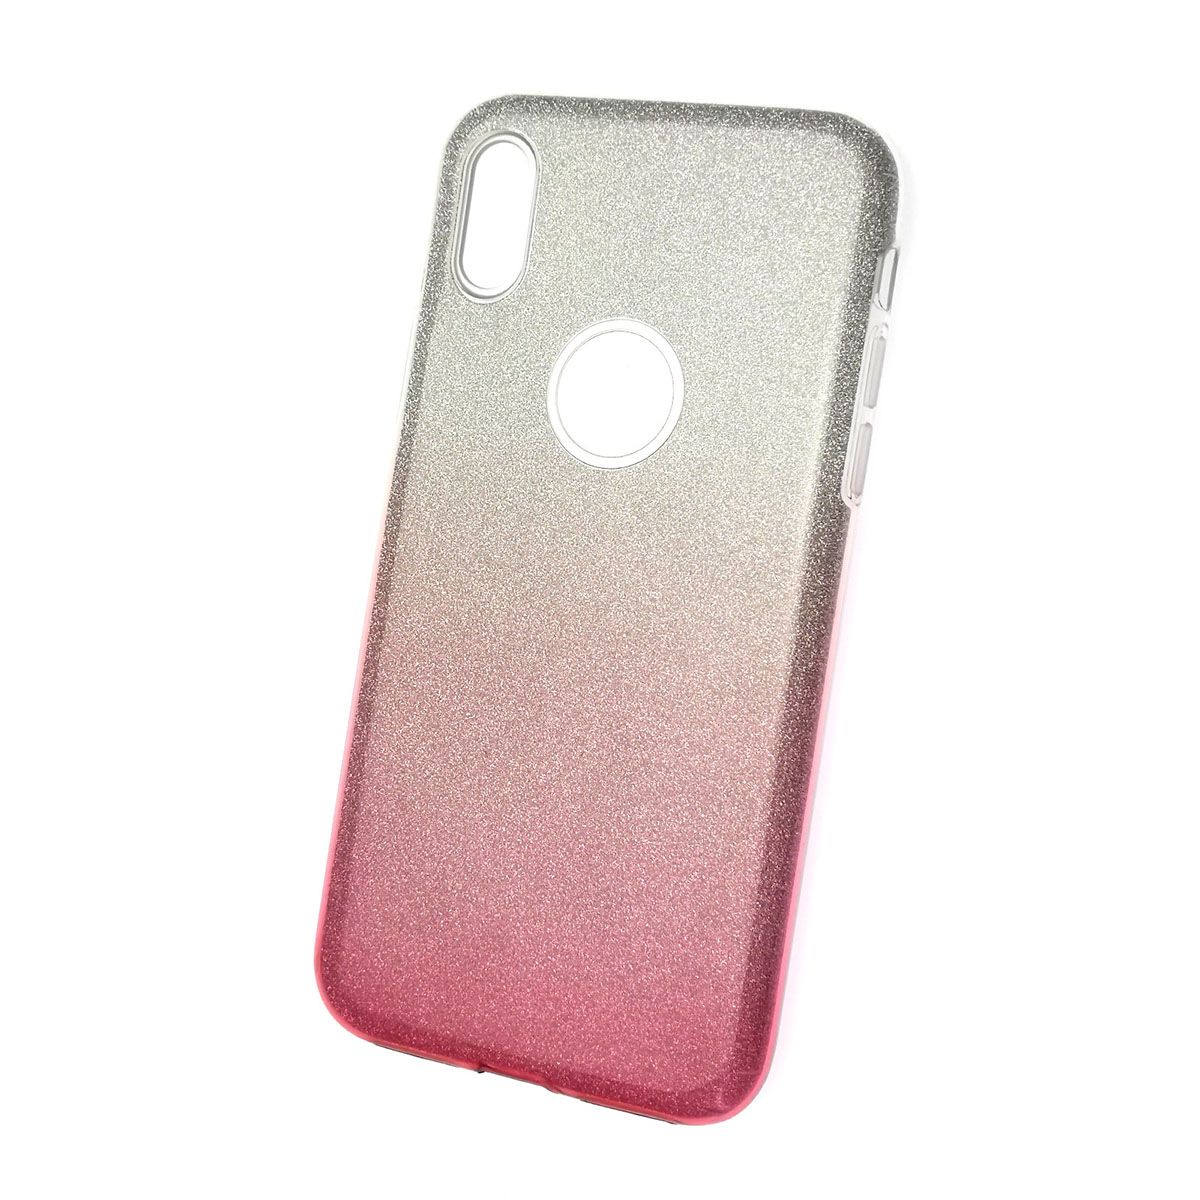 Чехол накладка Shine для APPLE iPhone X, силикон, блестки, цвет серебристо розовый.